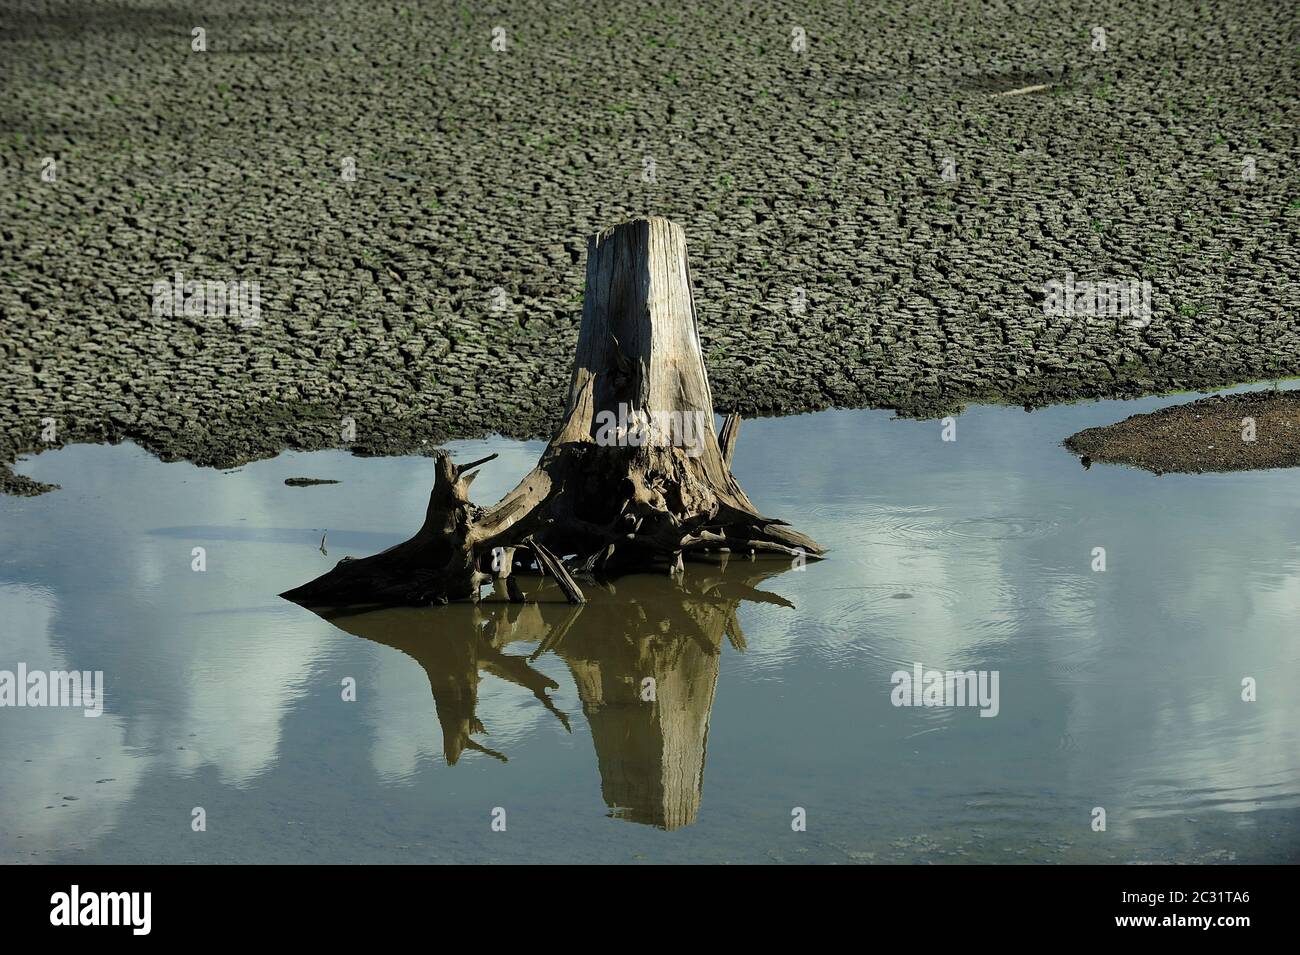 Toter Baum, trockener See, Lehm zerrissene Erde, Schlamm. Klimawandel, Dürre, Wasserknappheit, Umweltkatastrophe. Ceará, Brasilien. Stockfoto